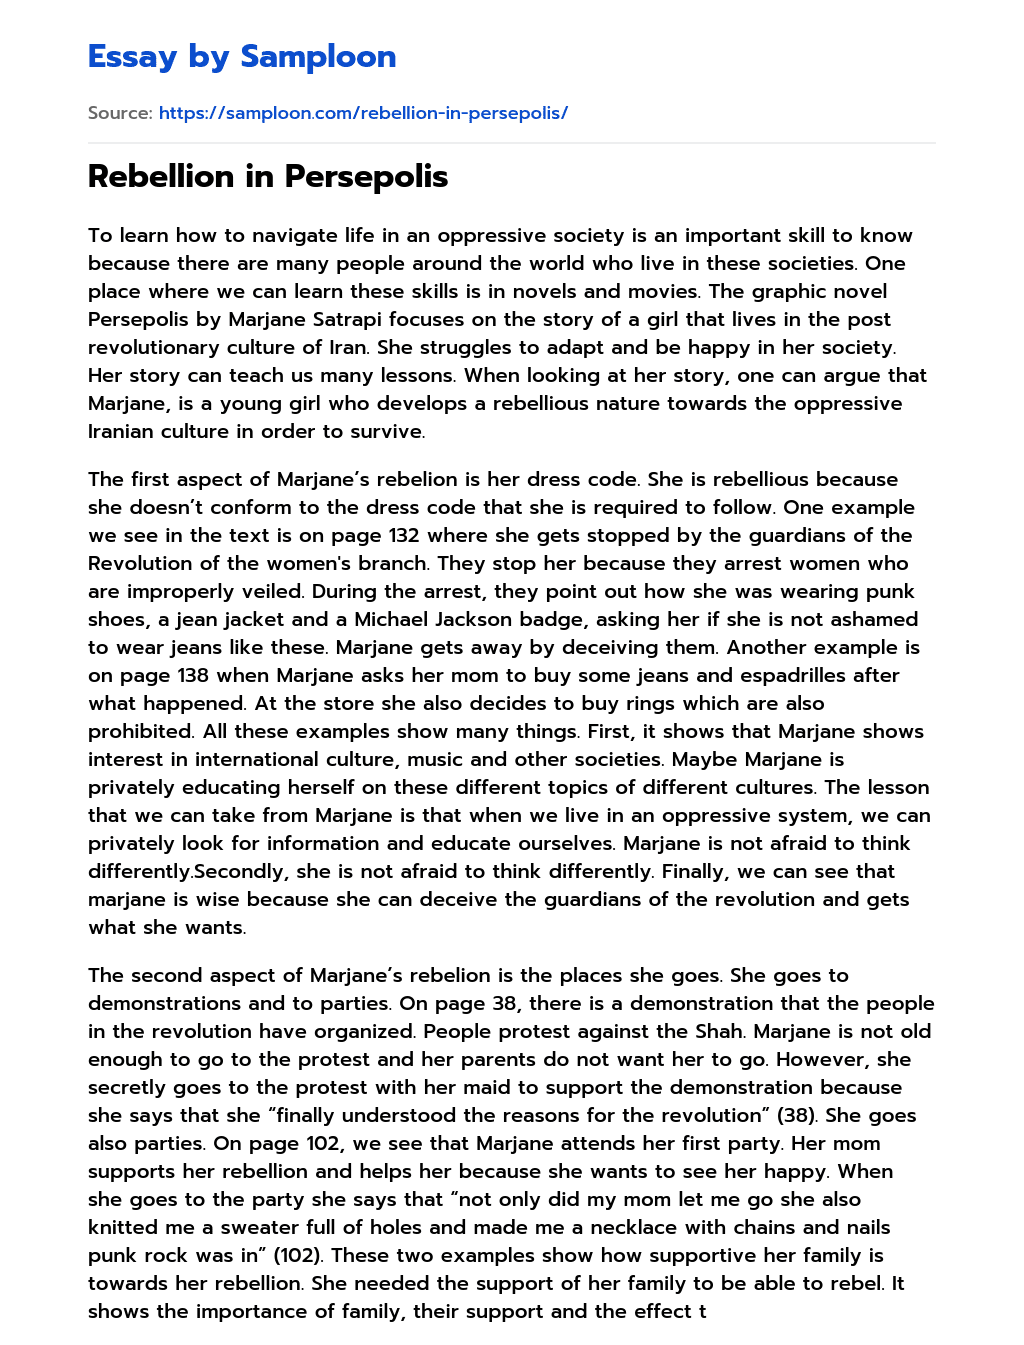 Rebellion in Persepolis Summary essay